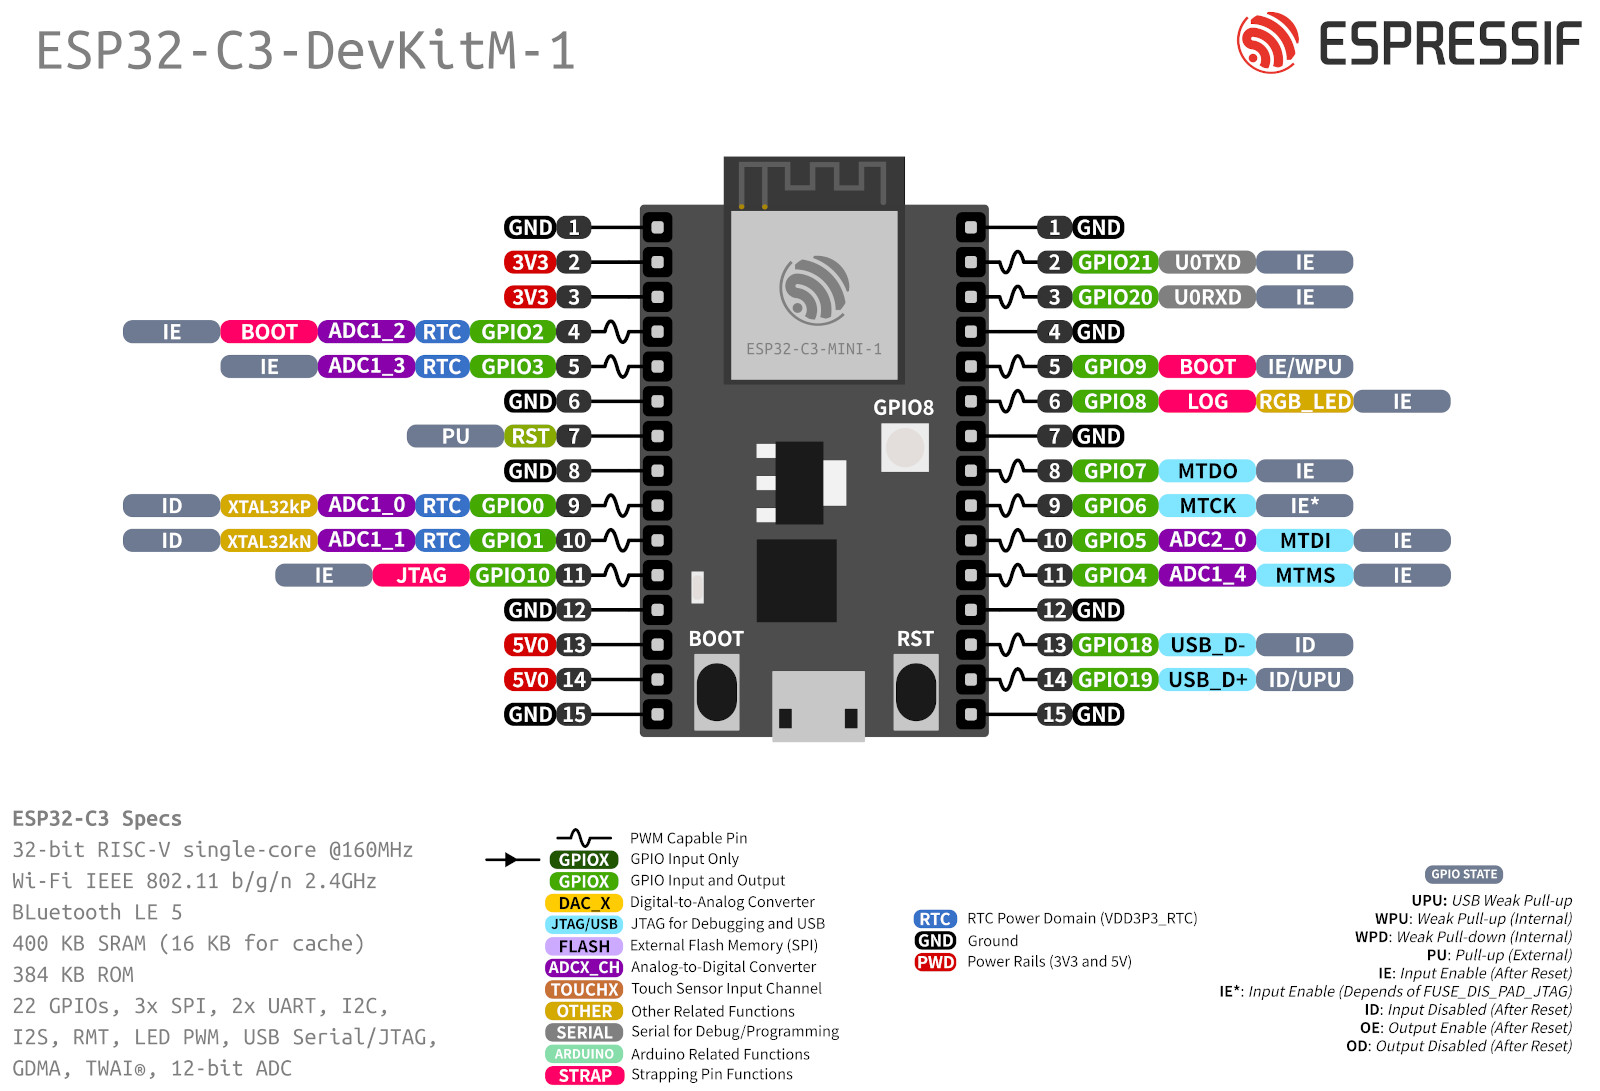 ESP32-C3 development board with 0.42inch LCD display WiFi